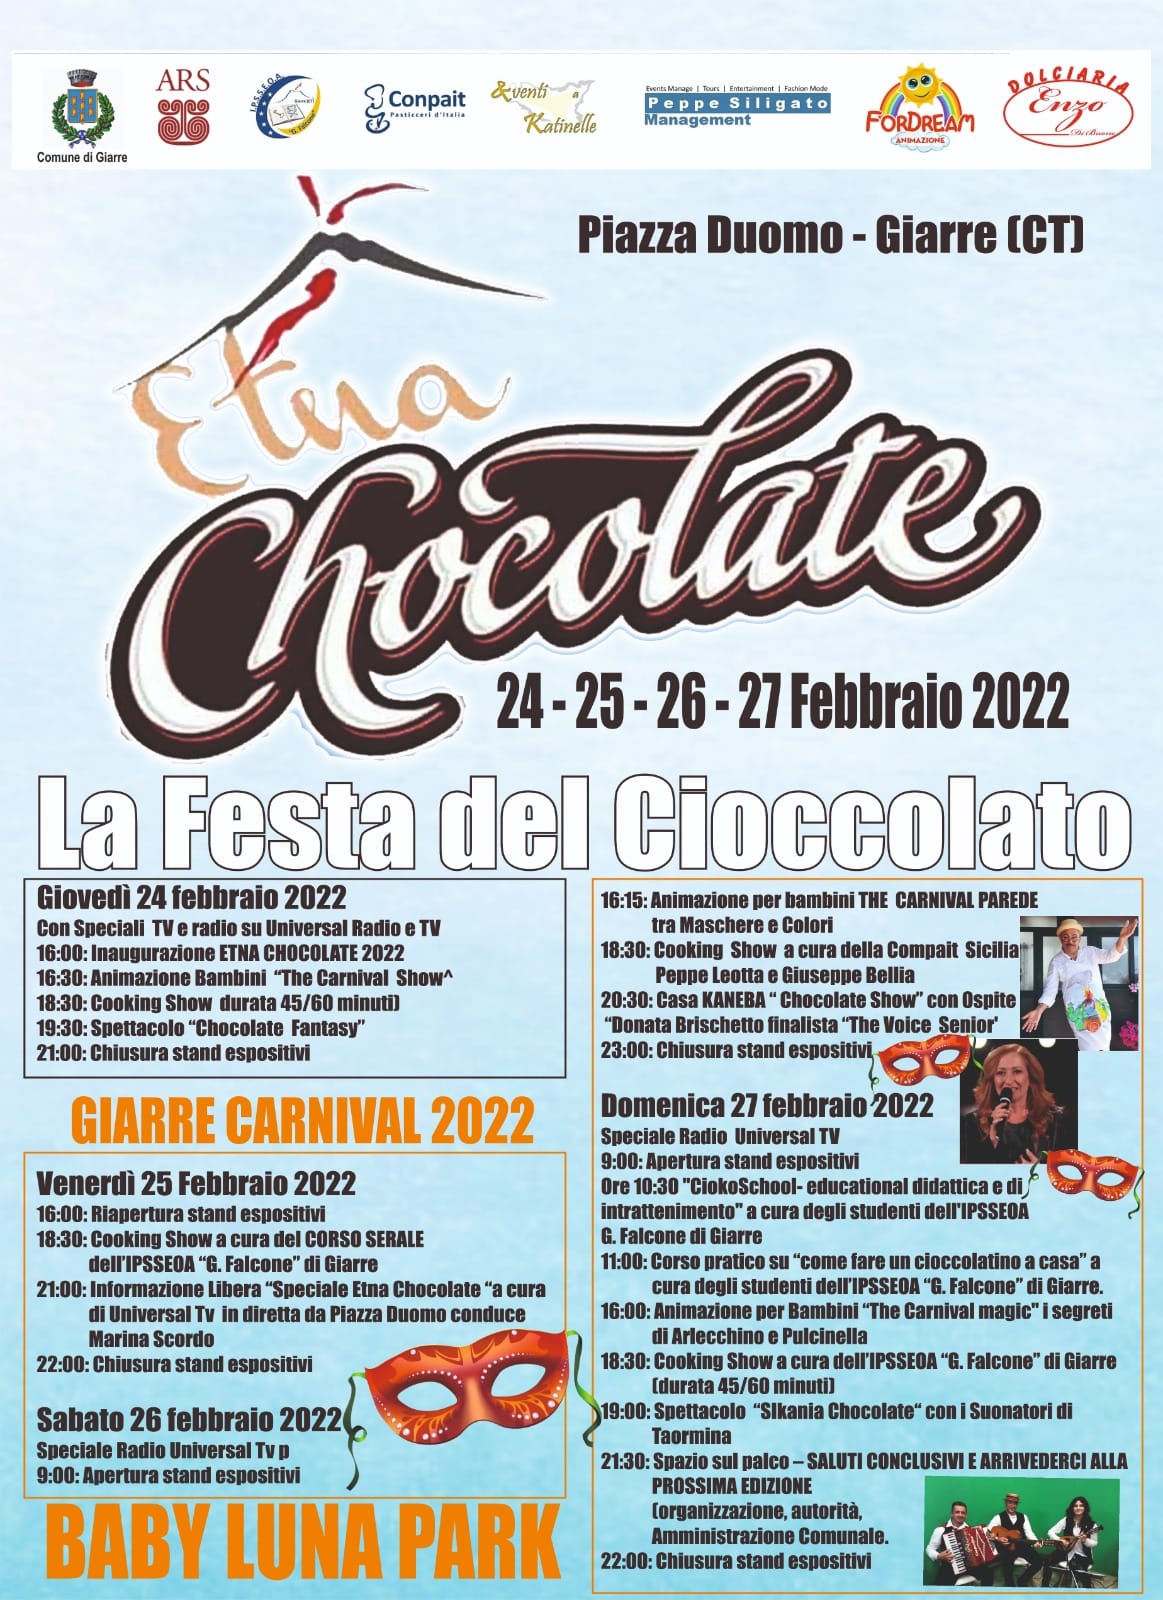 Etna Chocolate 2022